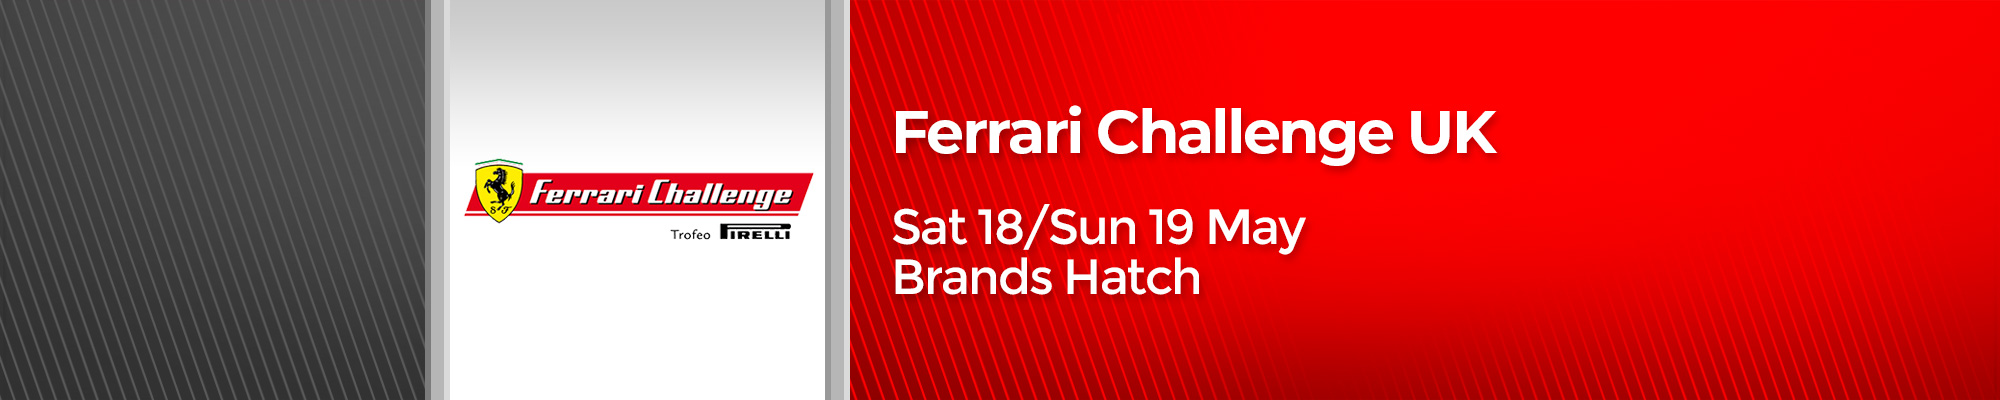 Ferrari Challenge UK